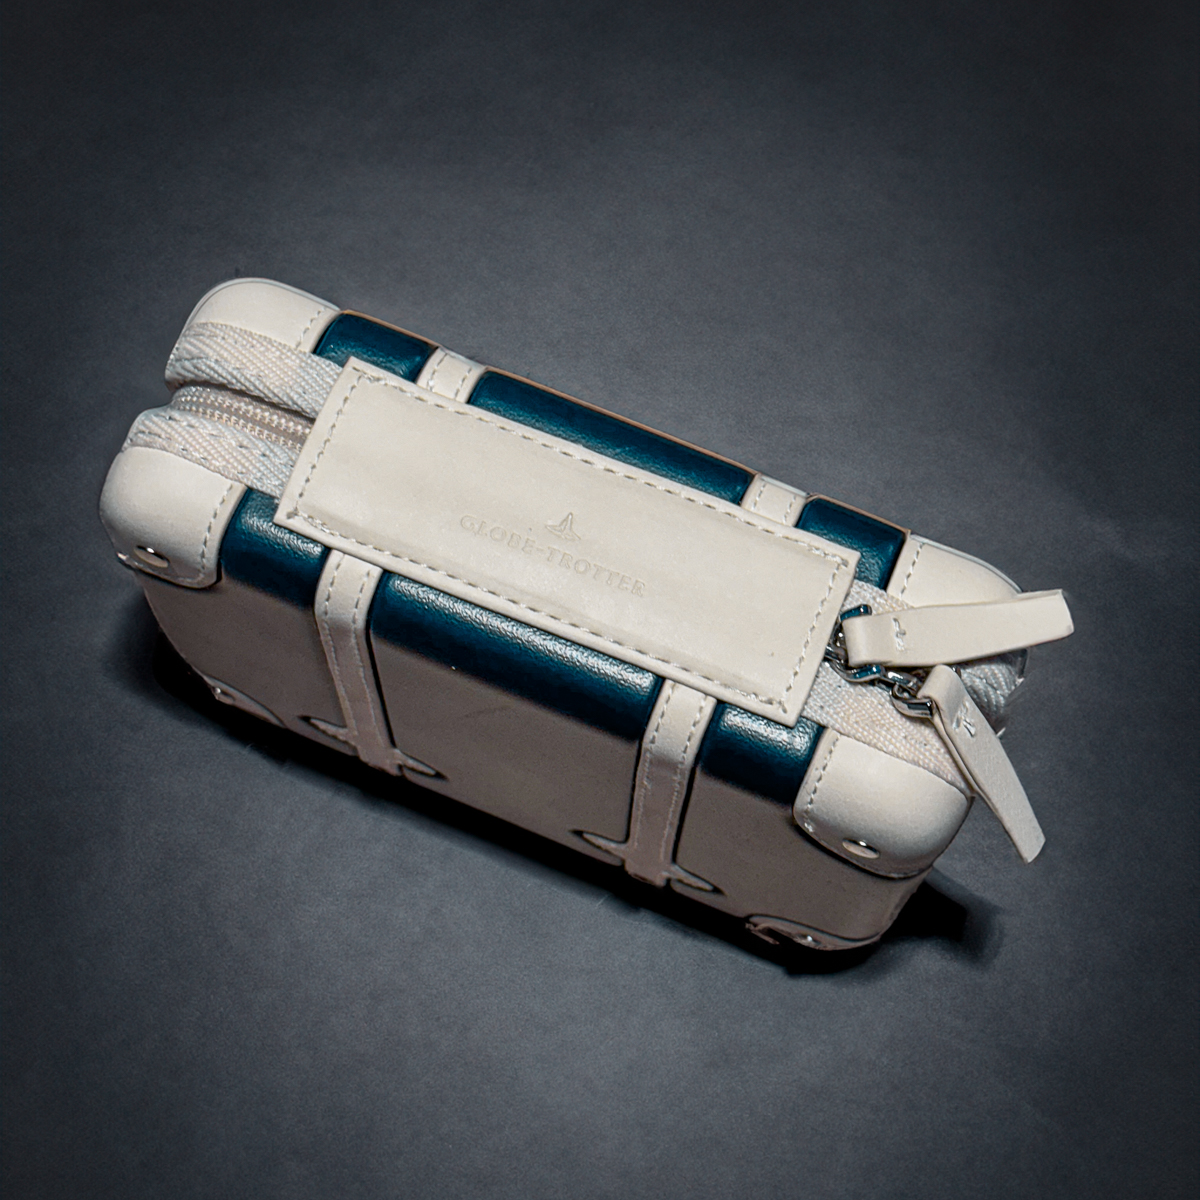 Blue Globe Trotter hard-shell amenity kit.